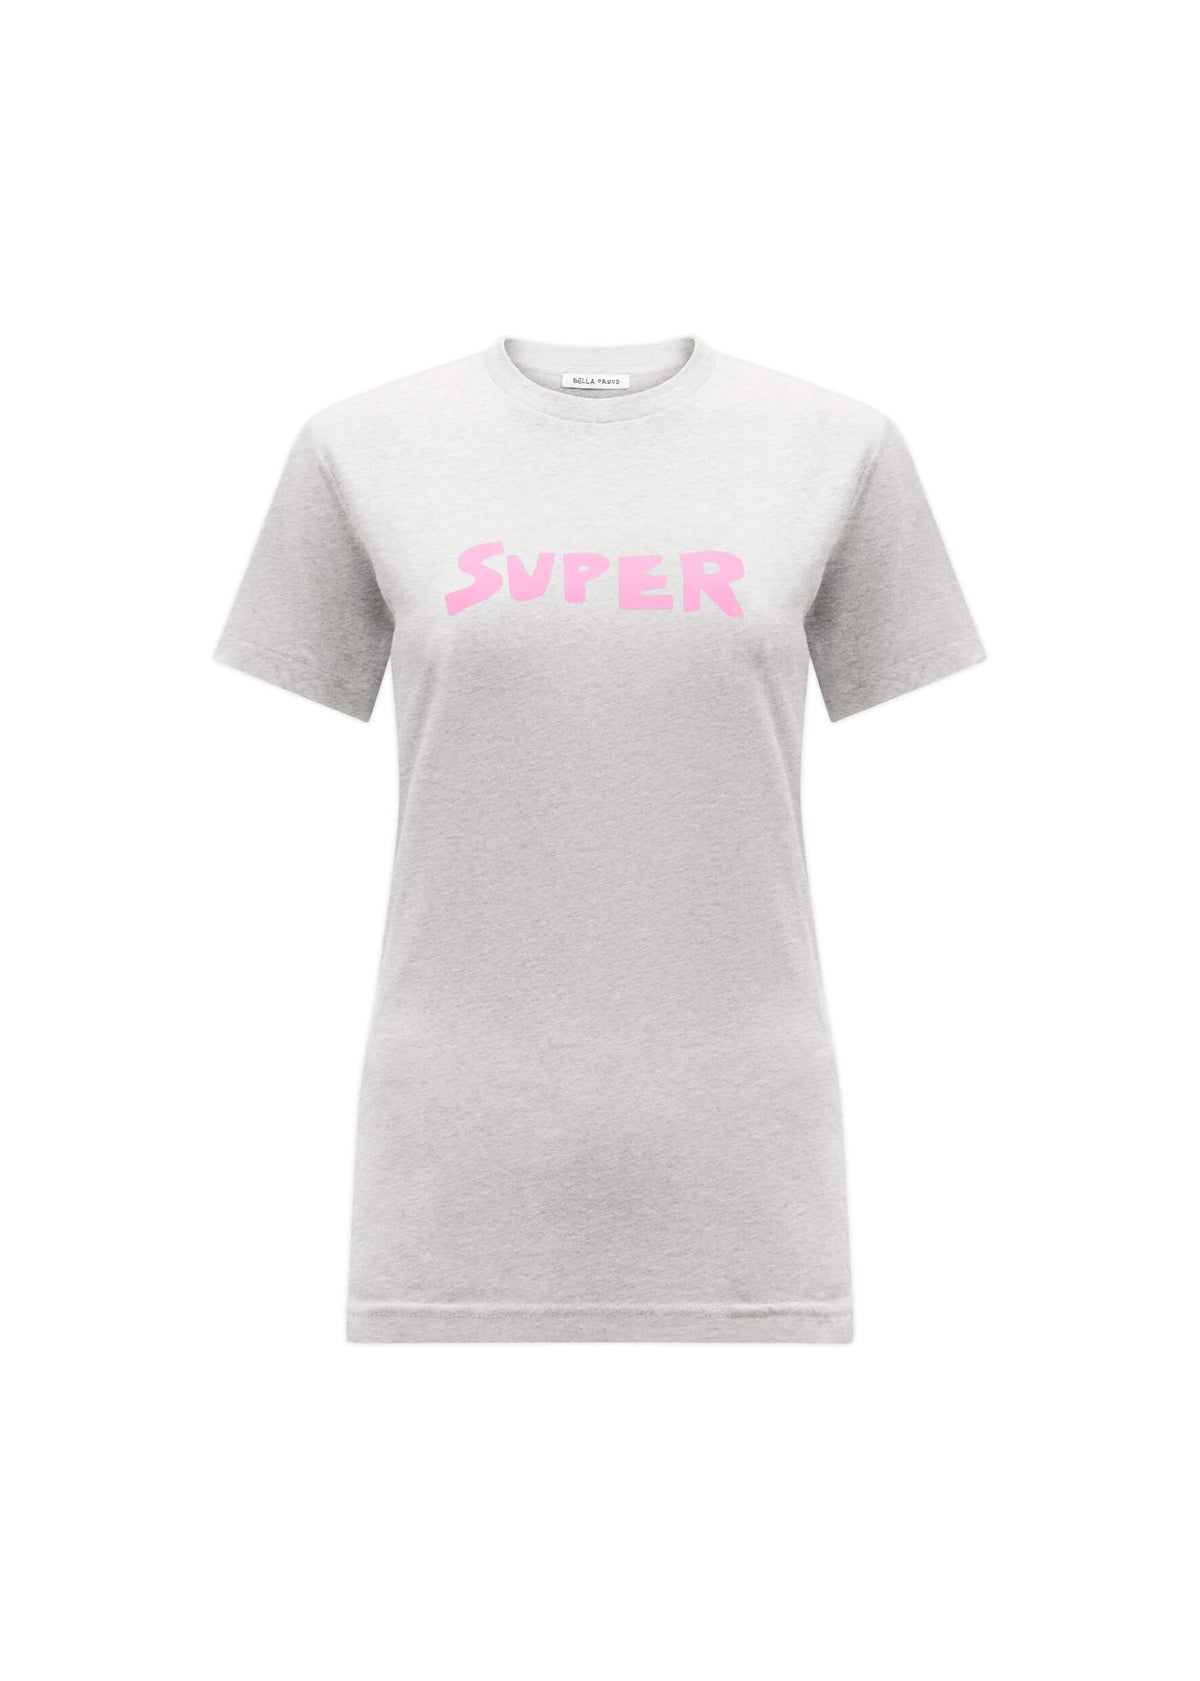 BF Super T shirt in grey marl